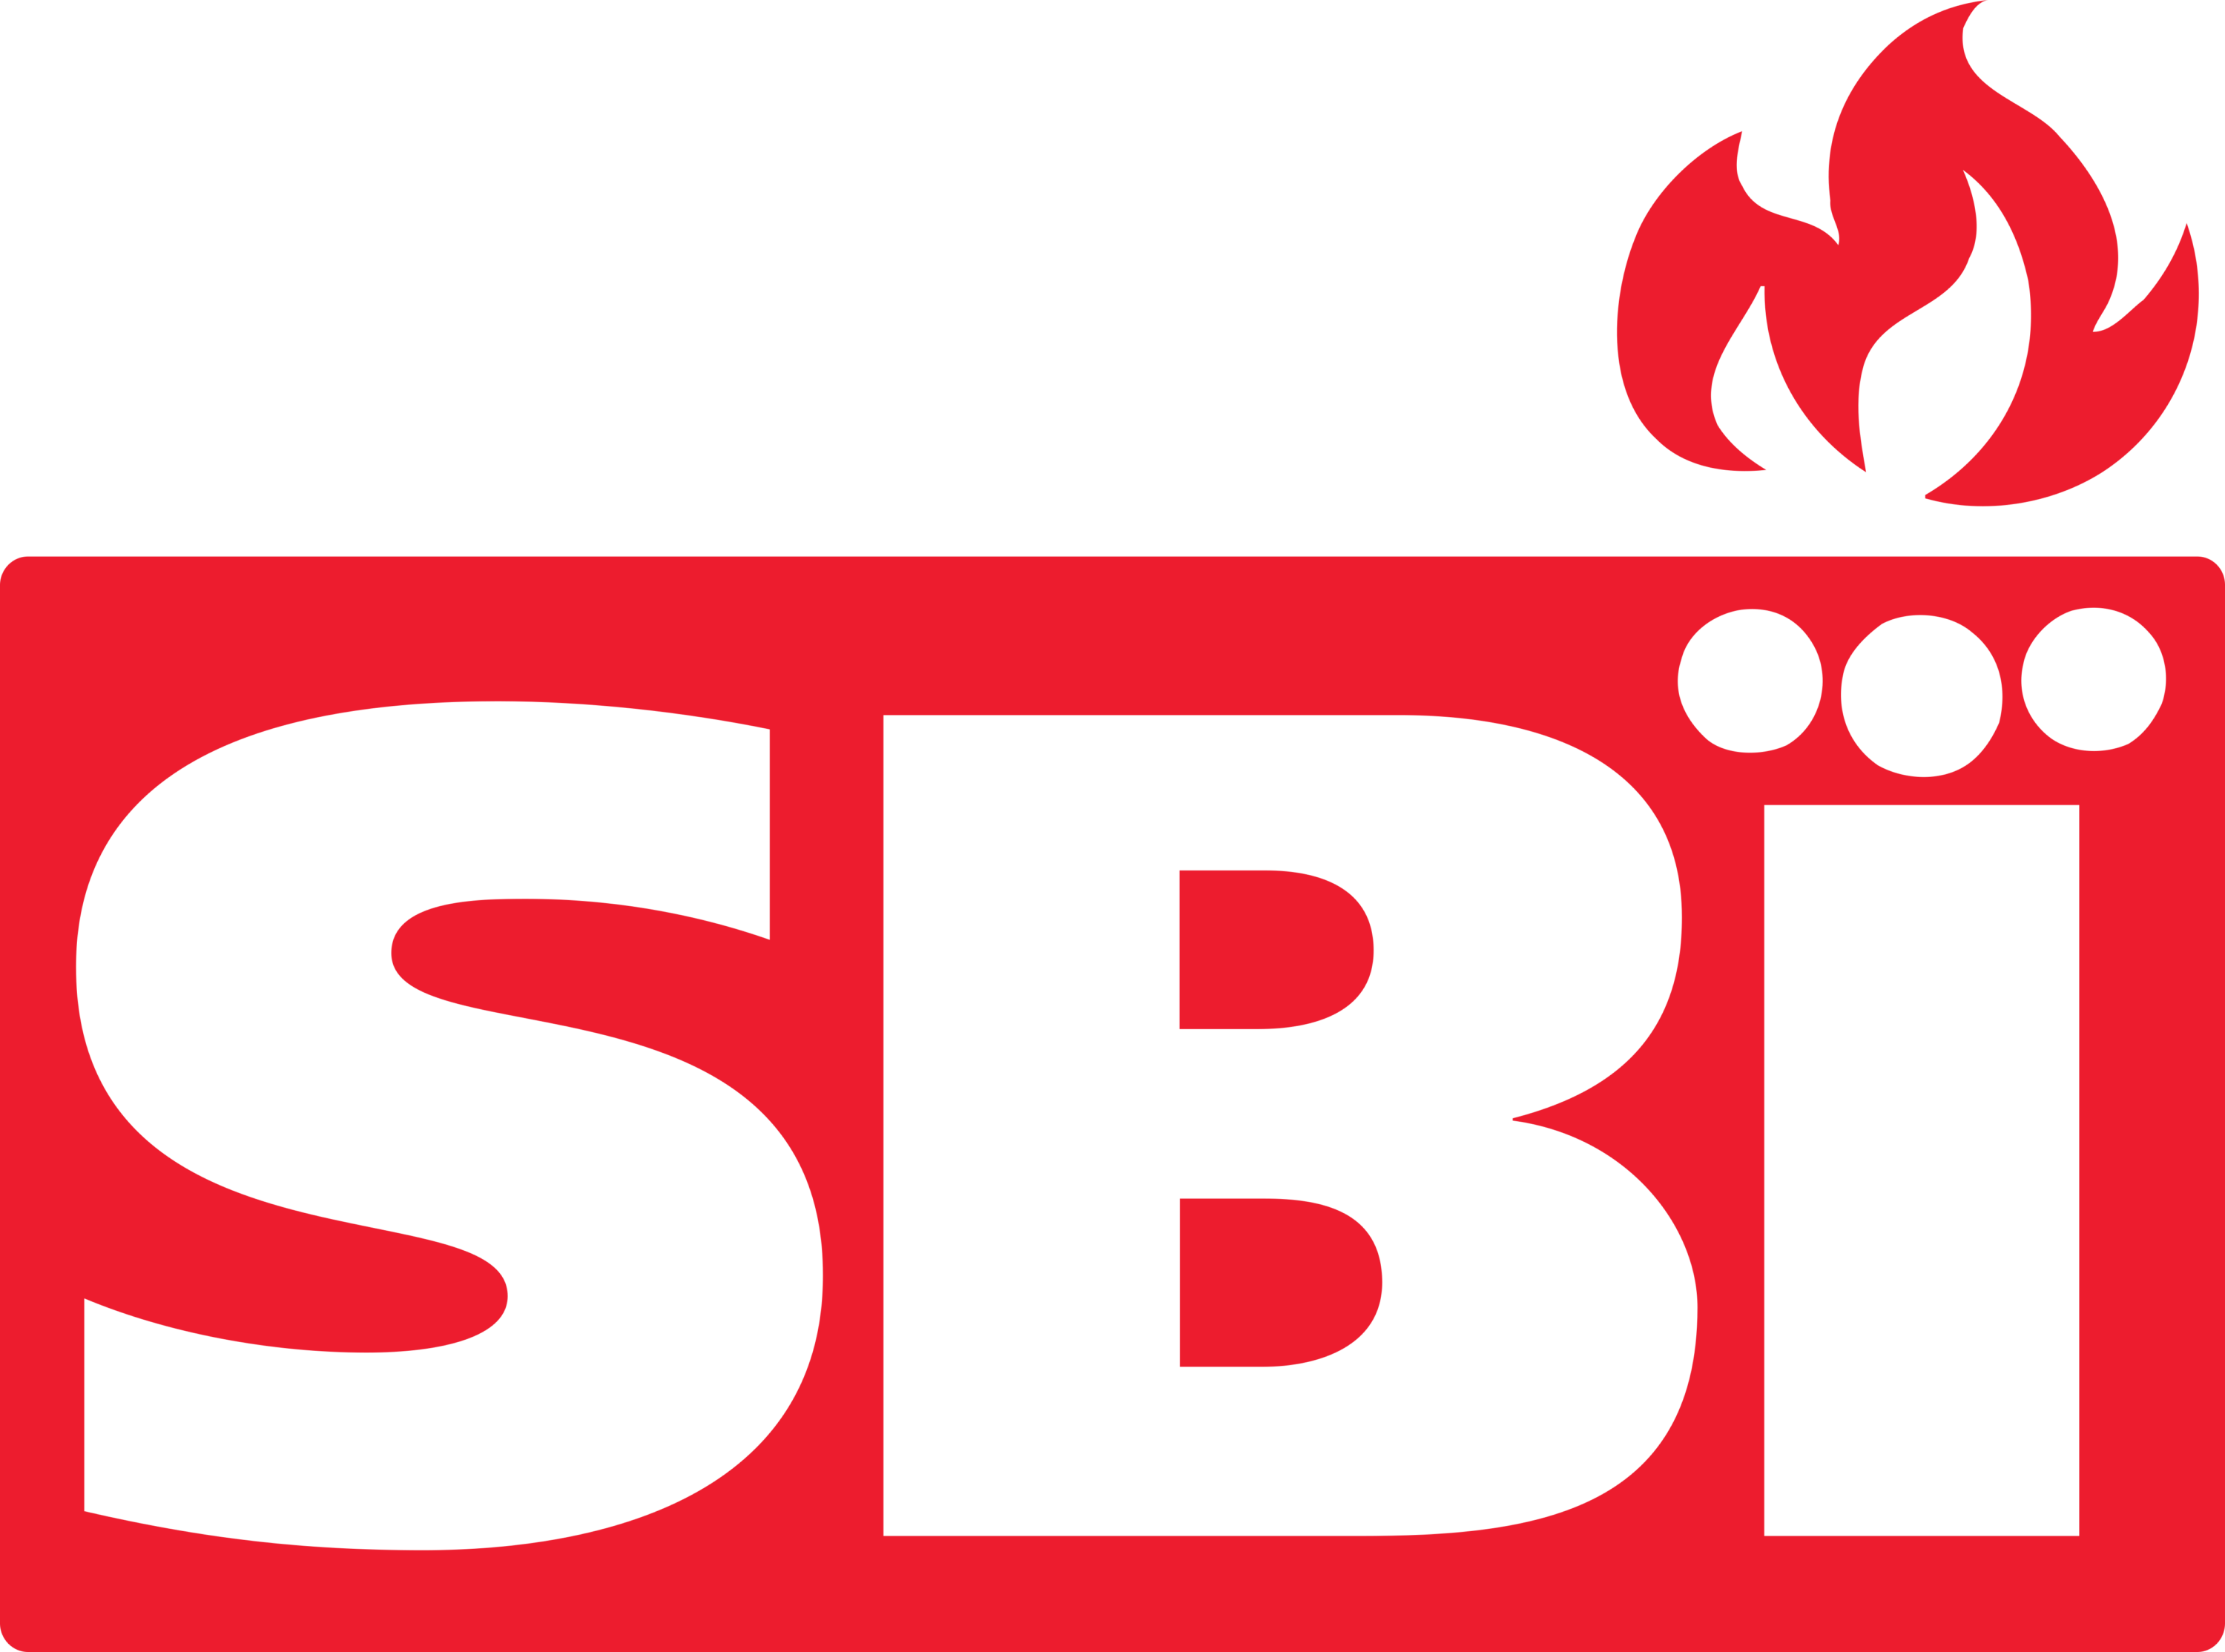 Stove Builder International Logo